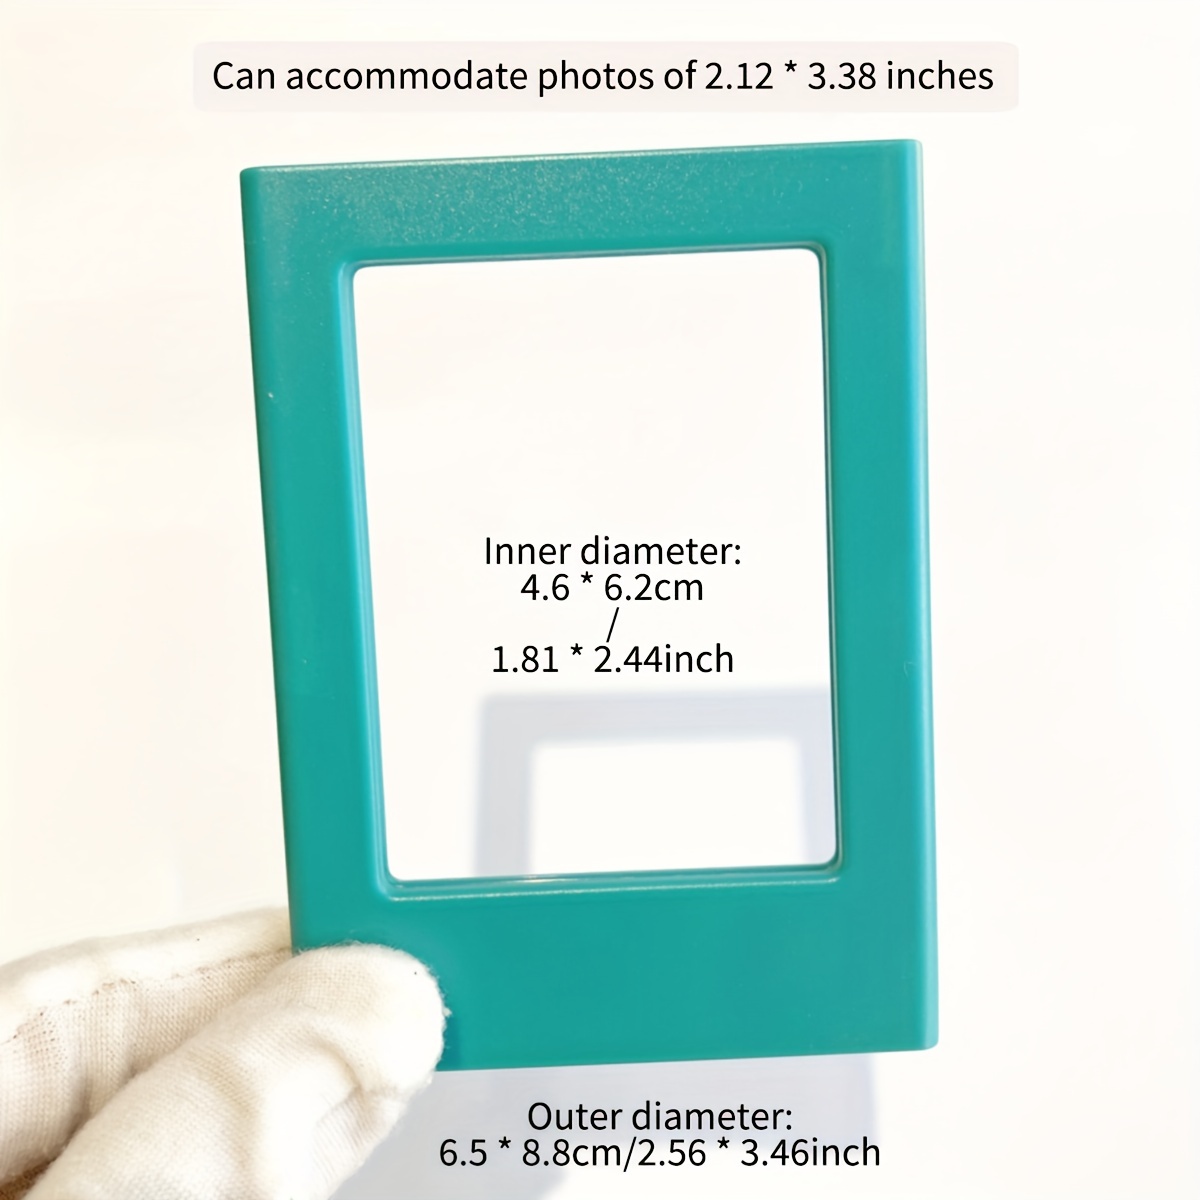 6 Pcs Magnet Picture Frames for Fridge Magnetic Photo Magnets for